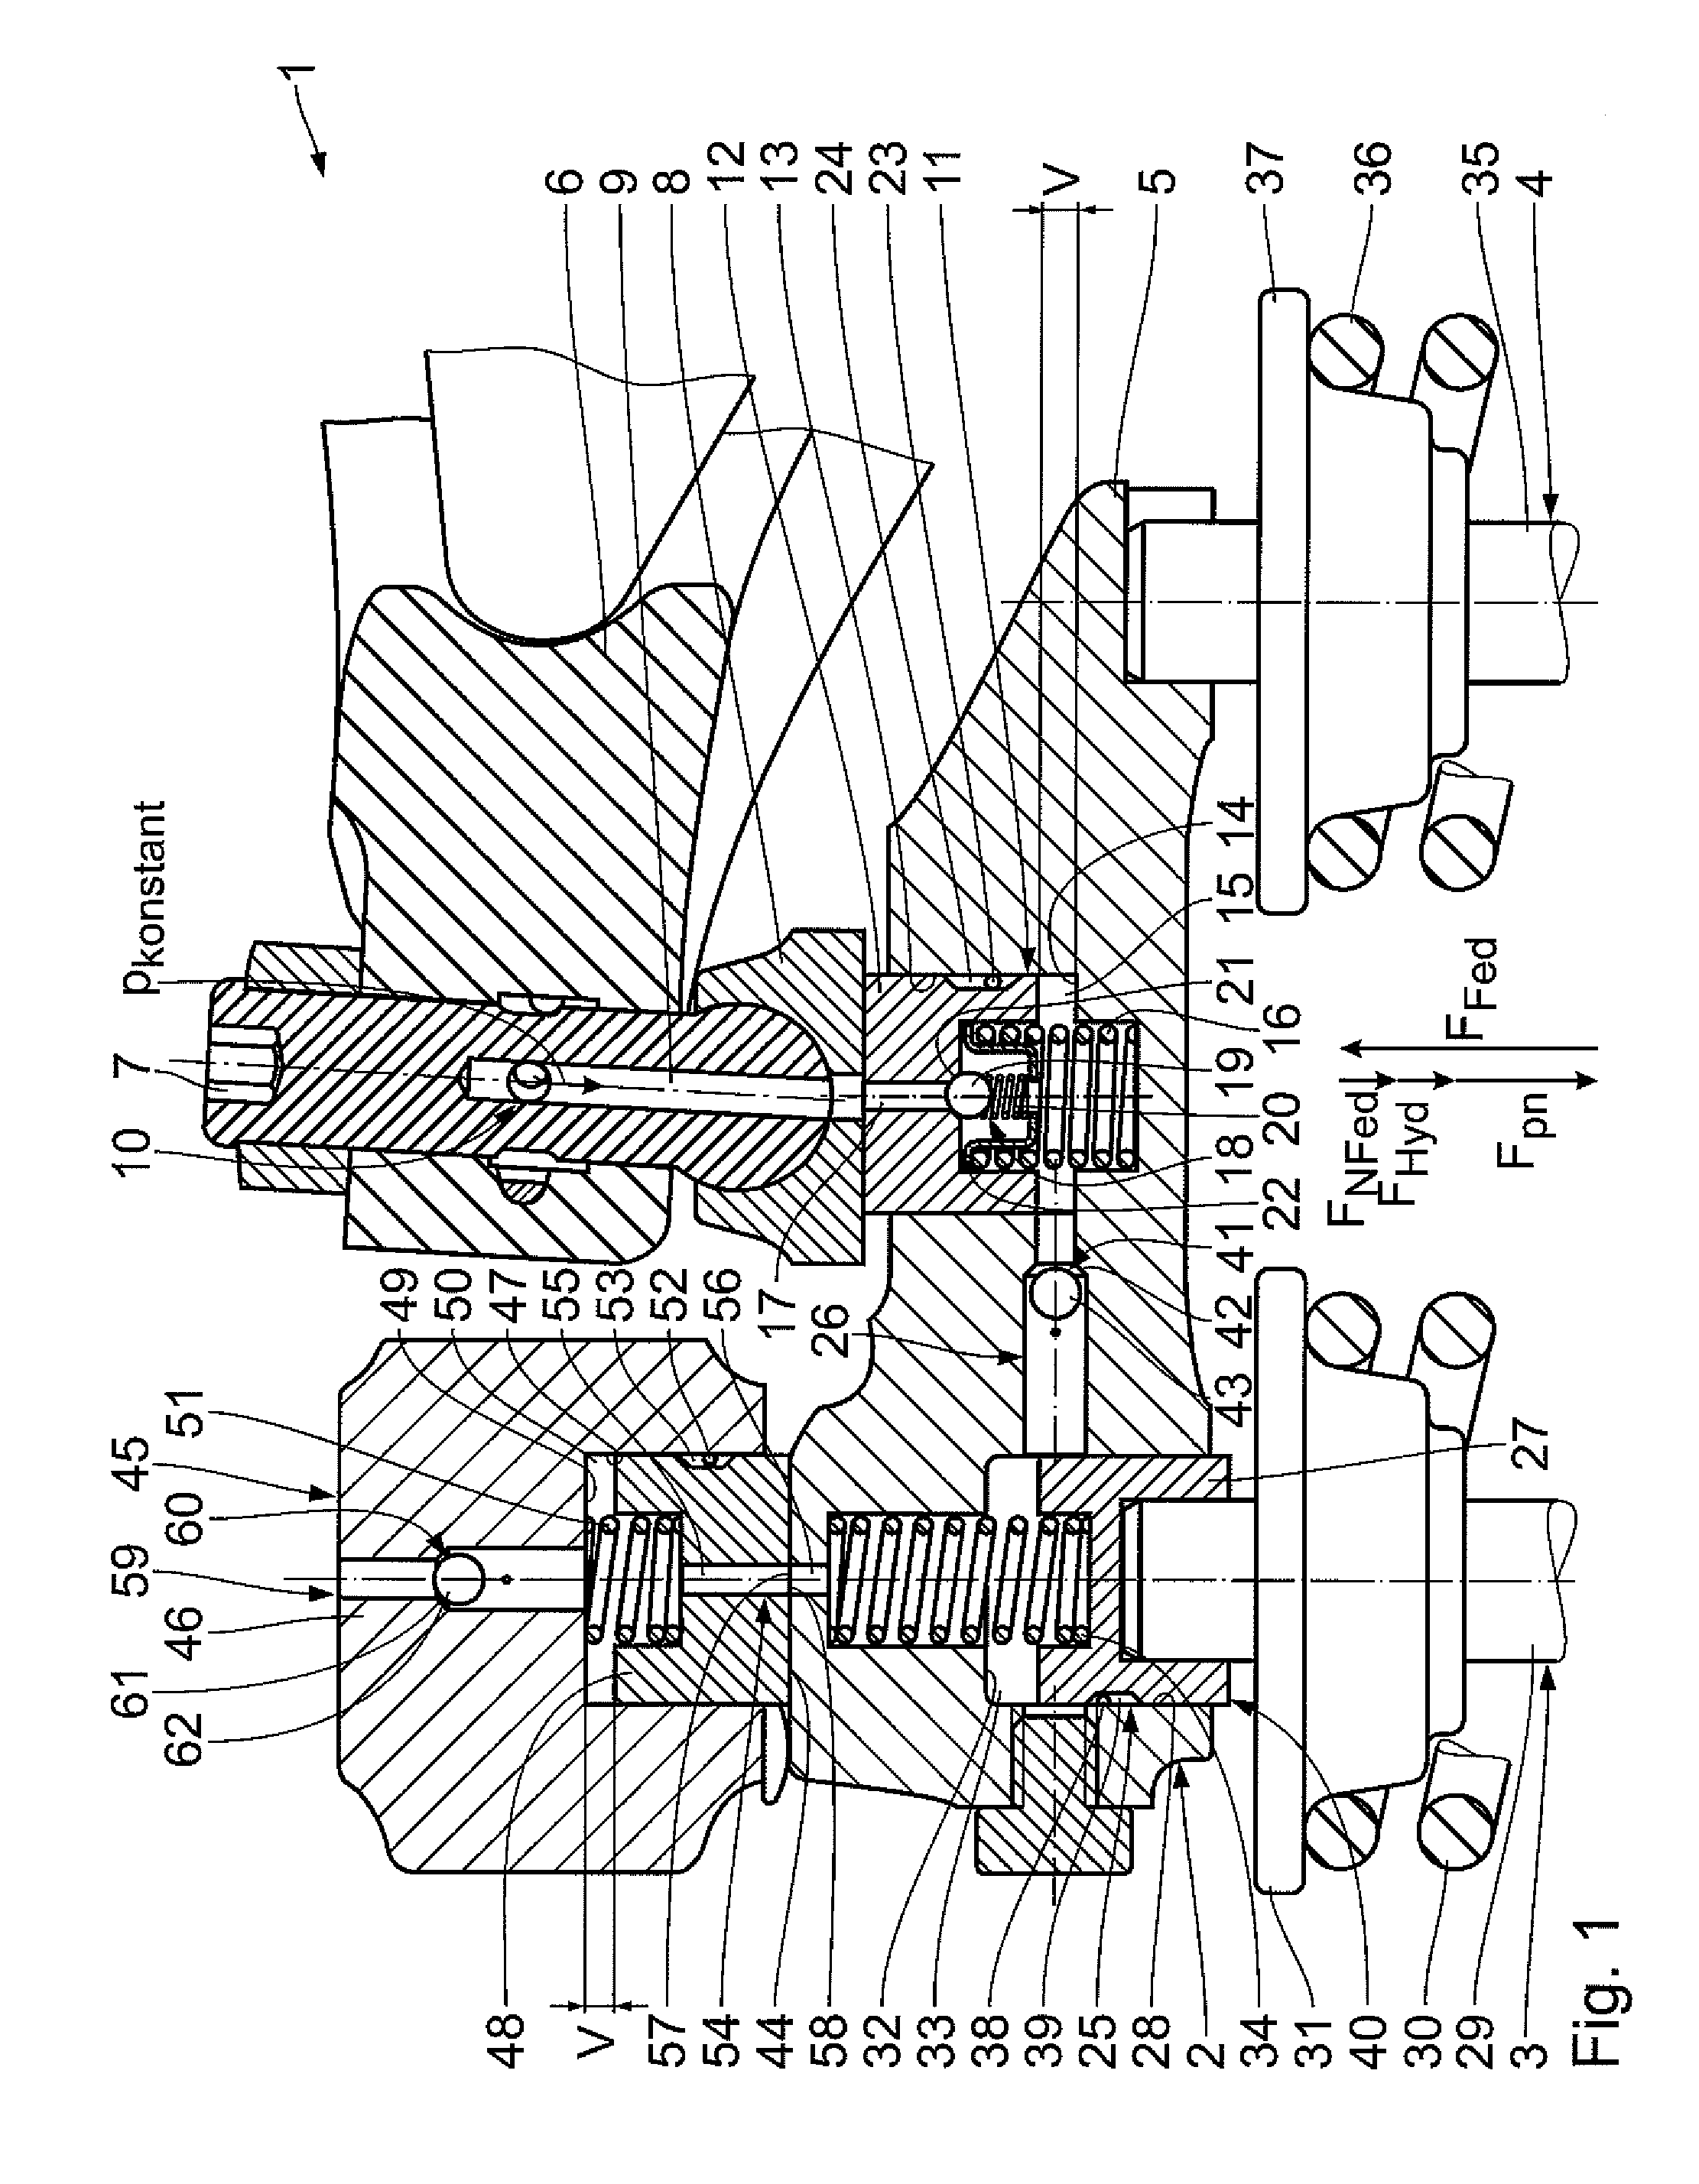 Internal combustion engine having a motor brake assembly